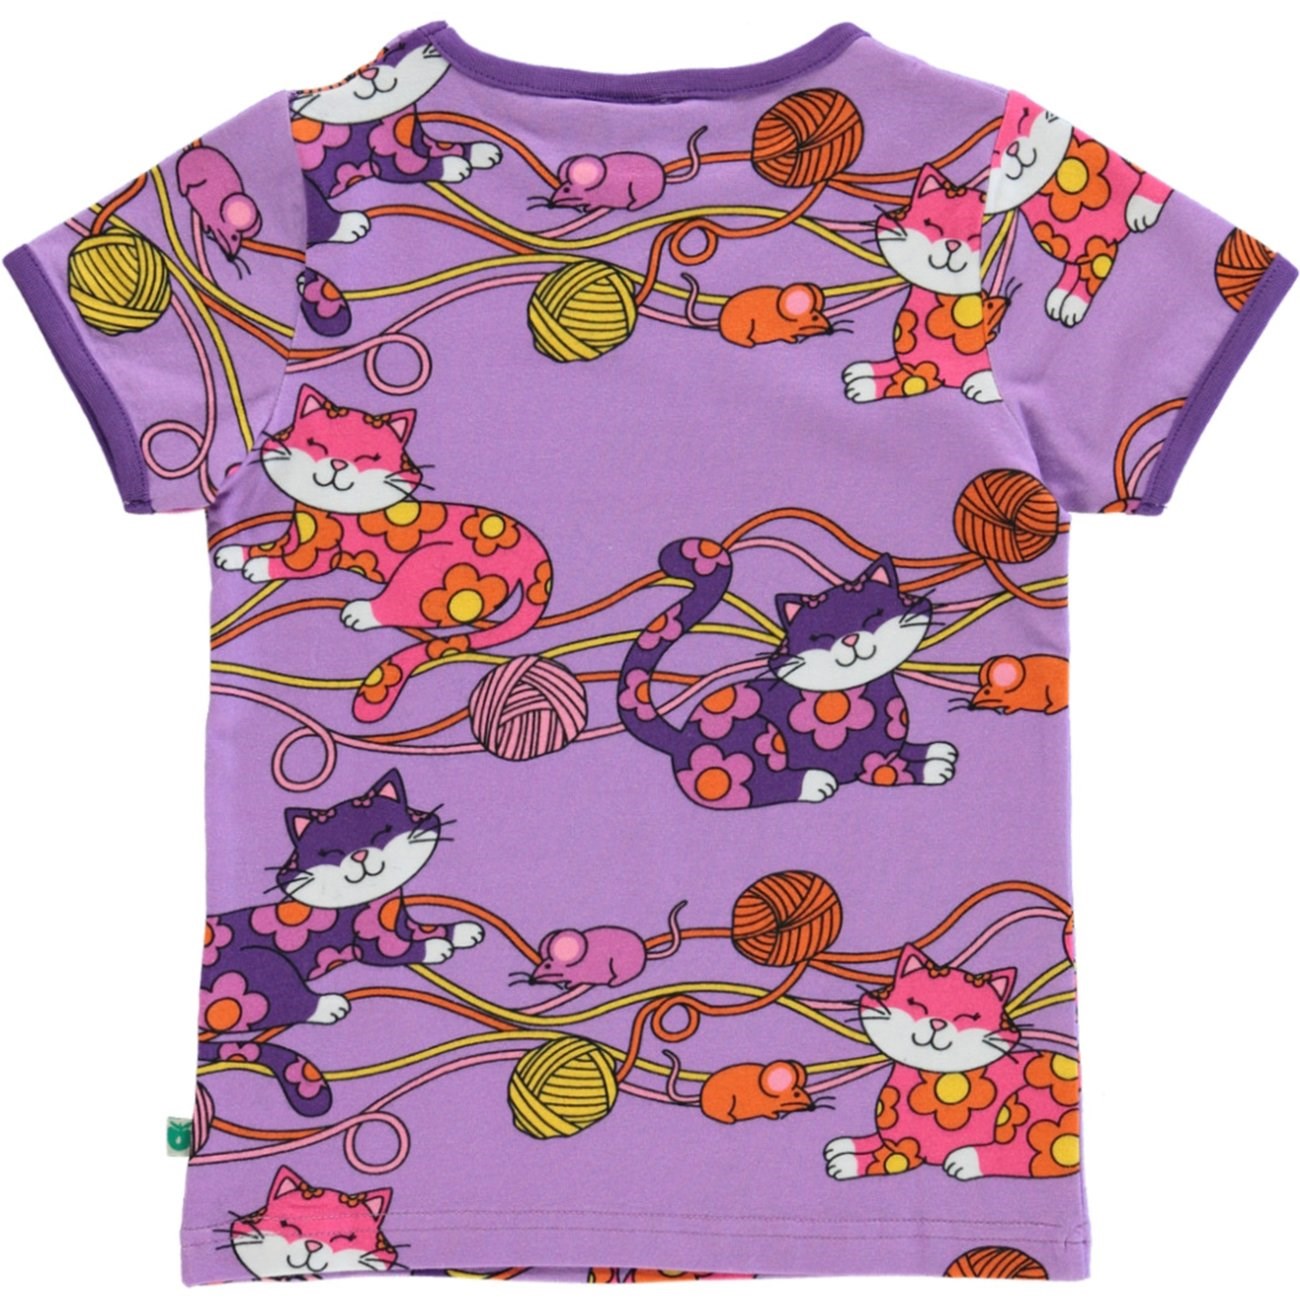 Småfolk Viola T-Shirt With Cats